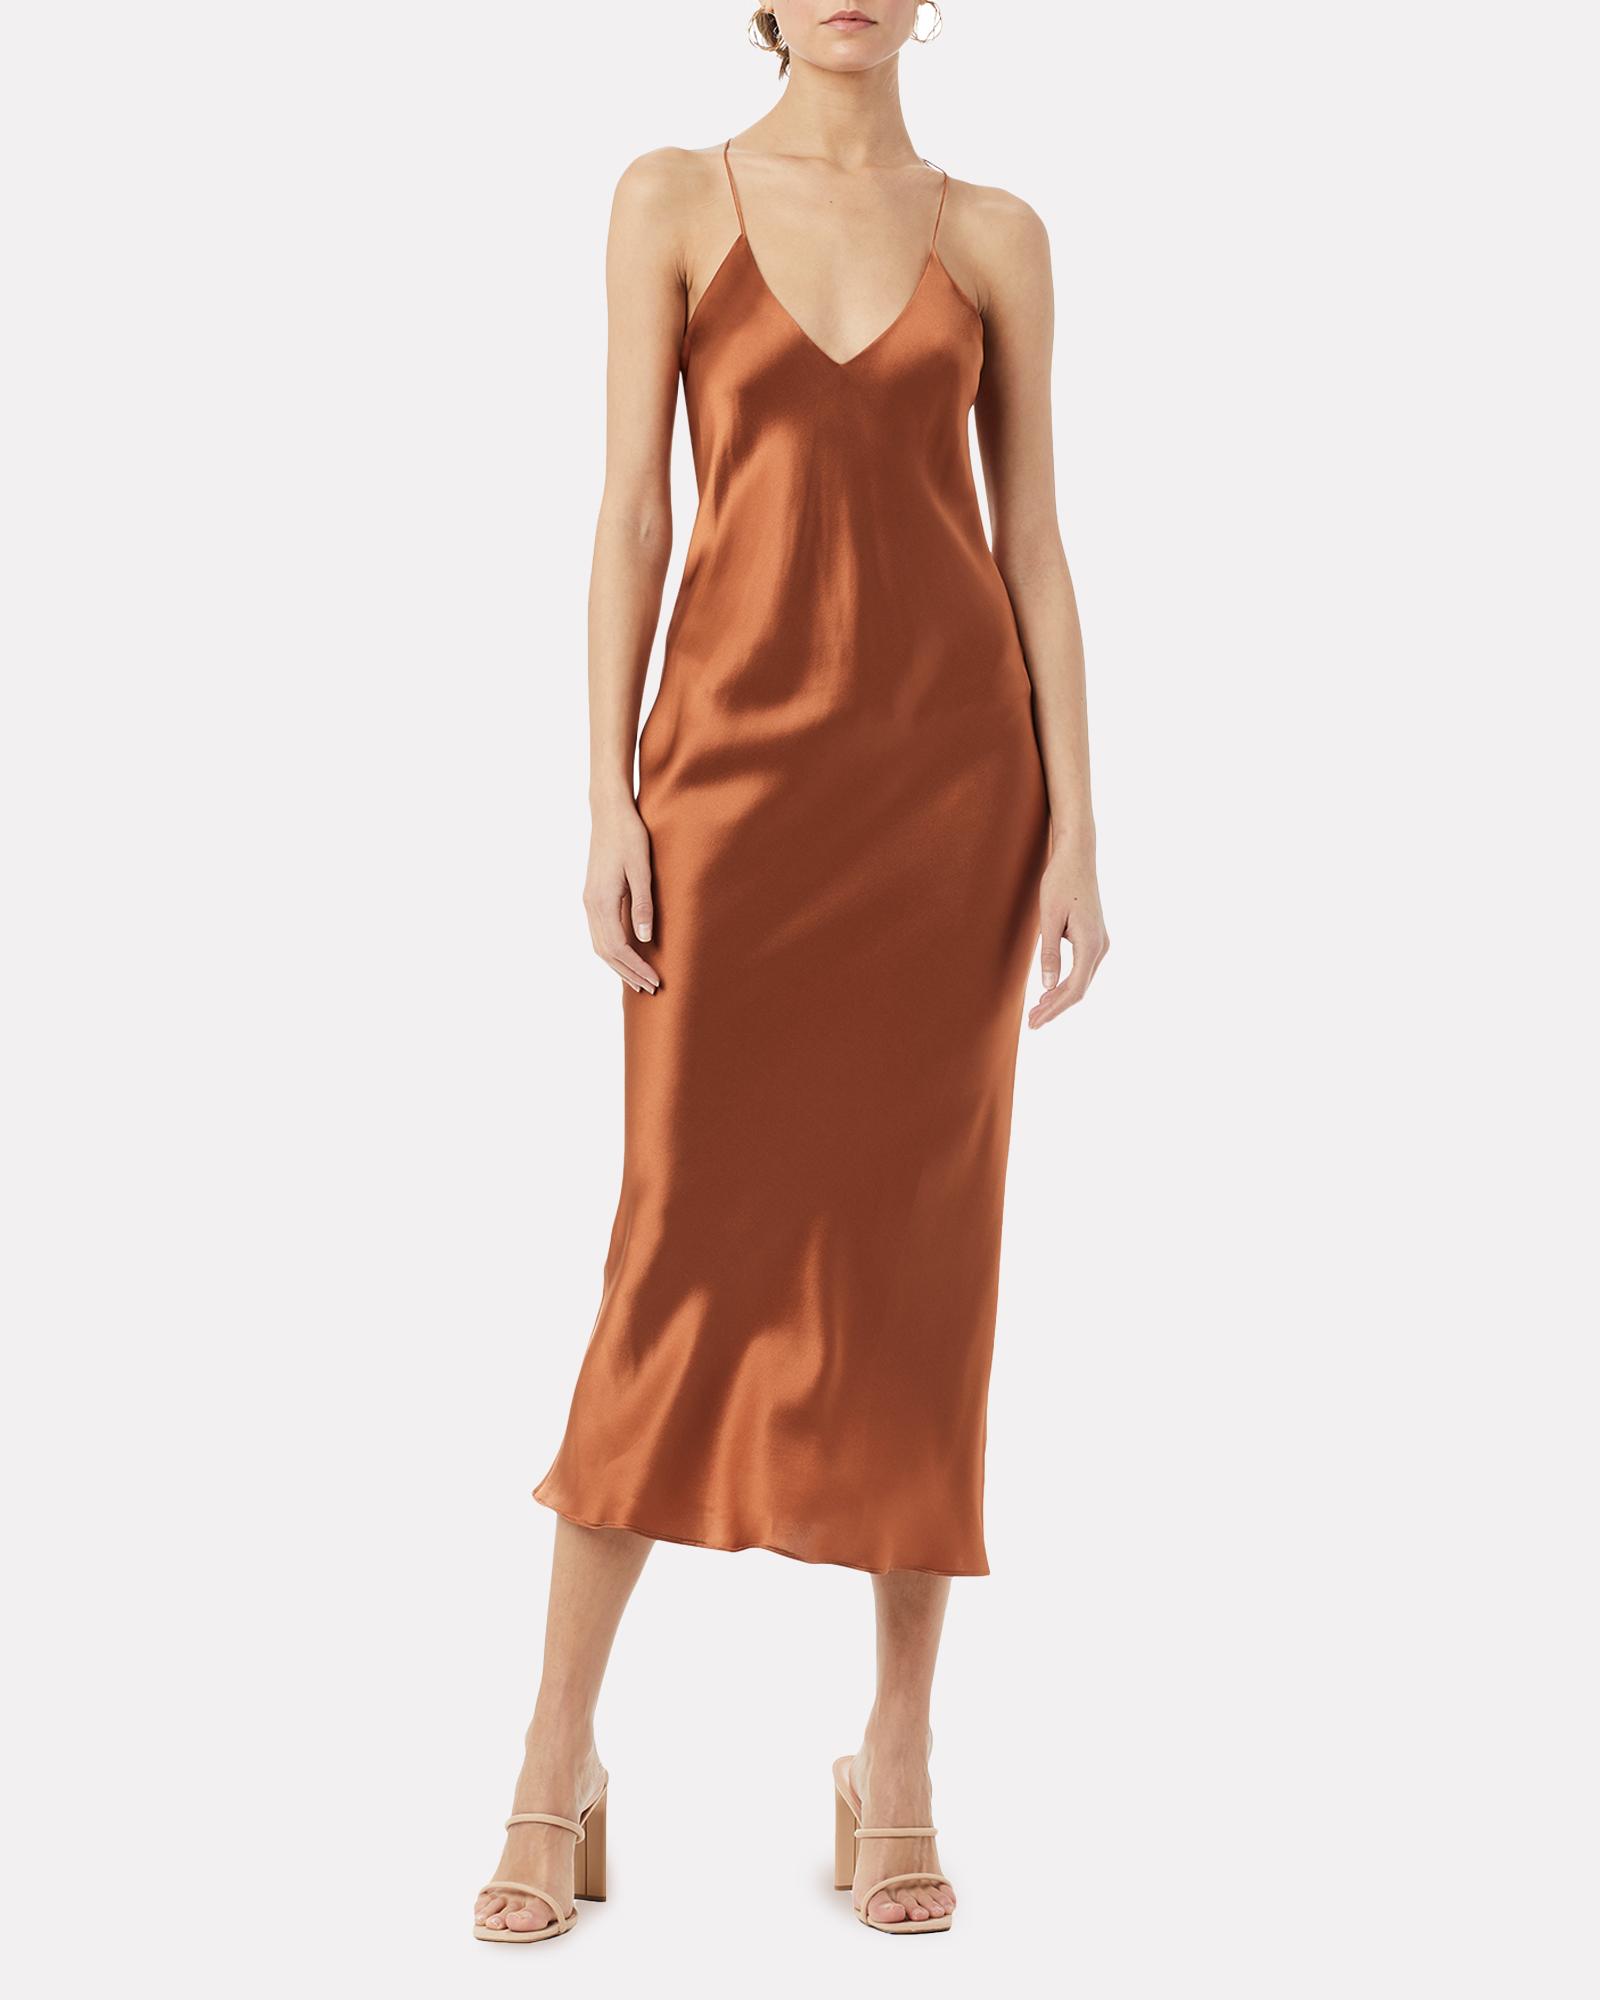 Alix NYC Lewis Silk Slip Dress in Brown - Lyst